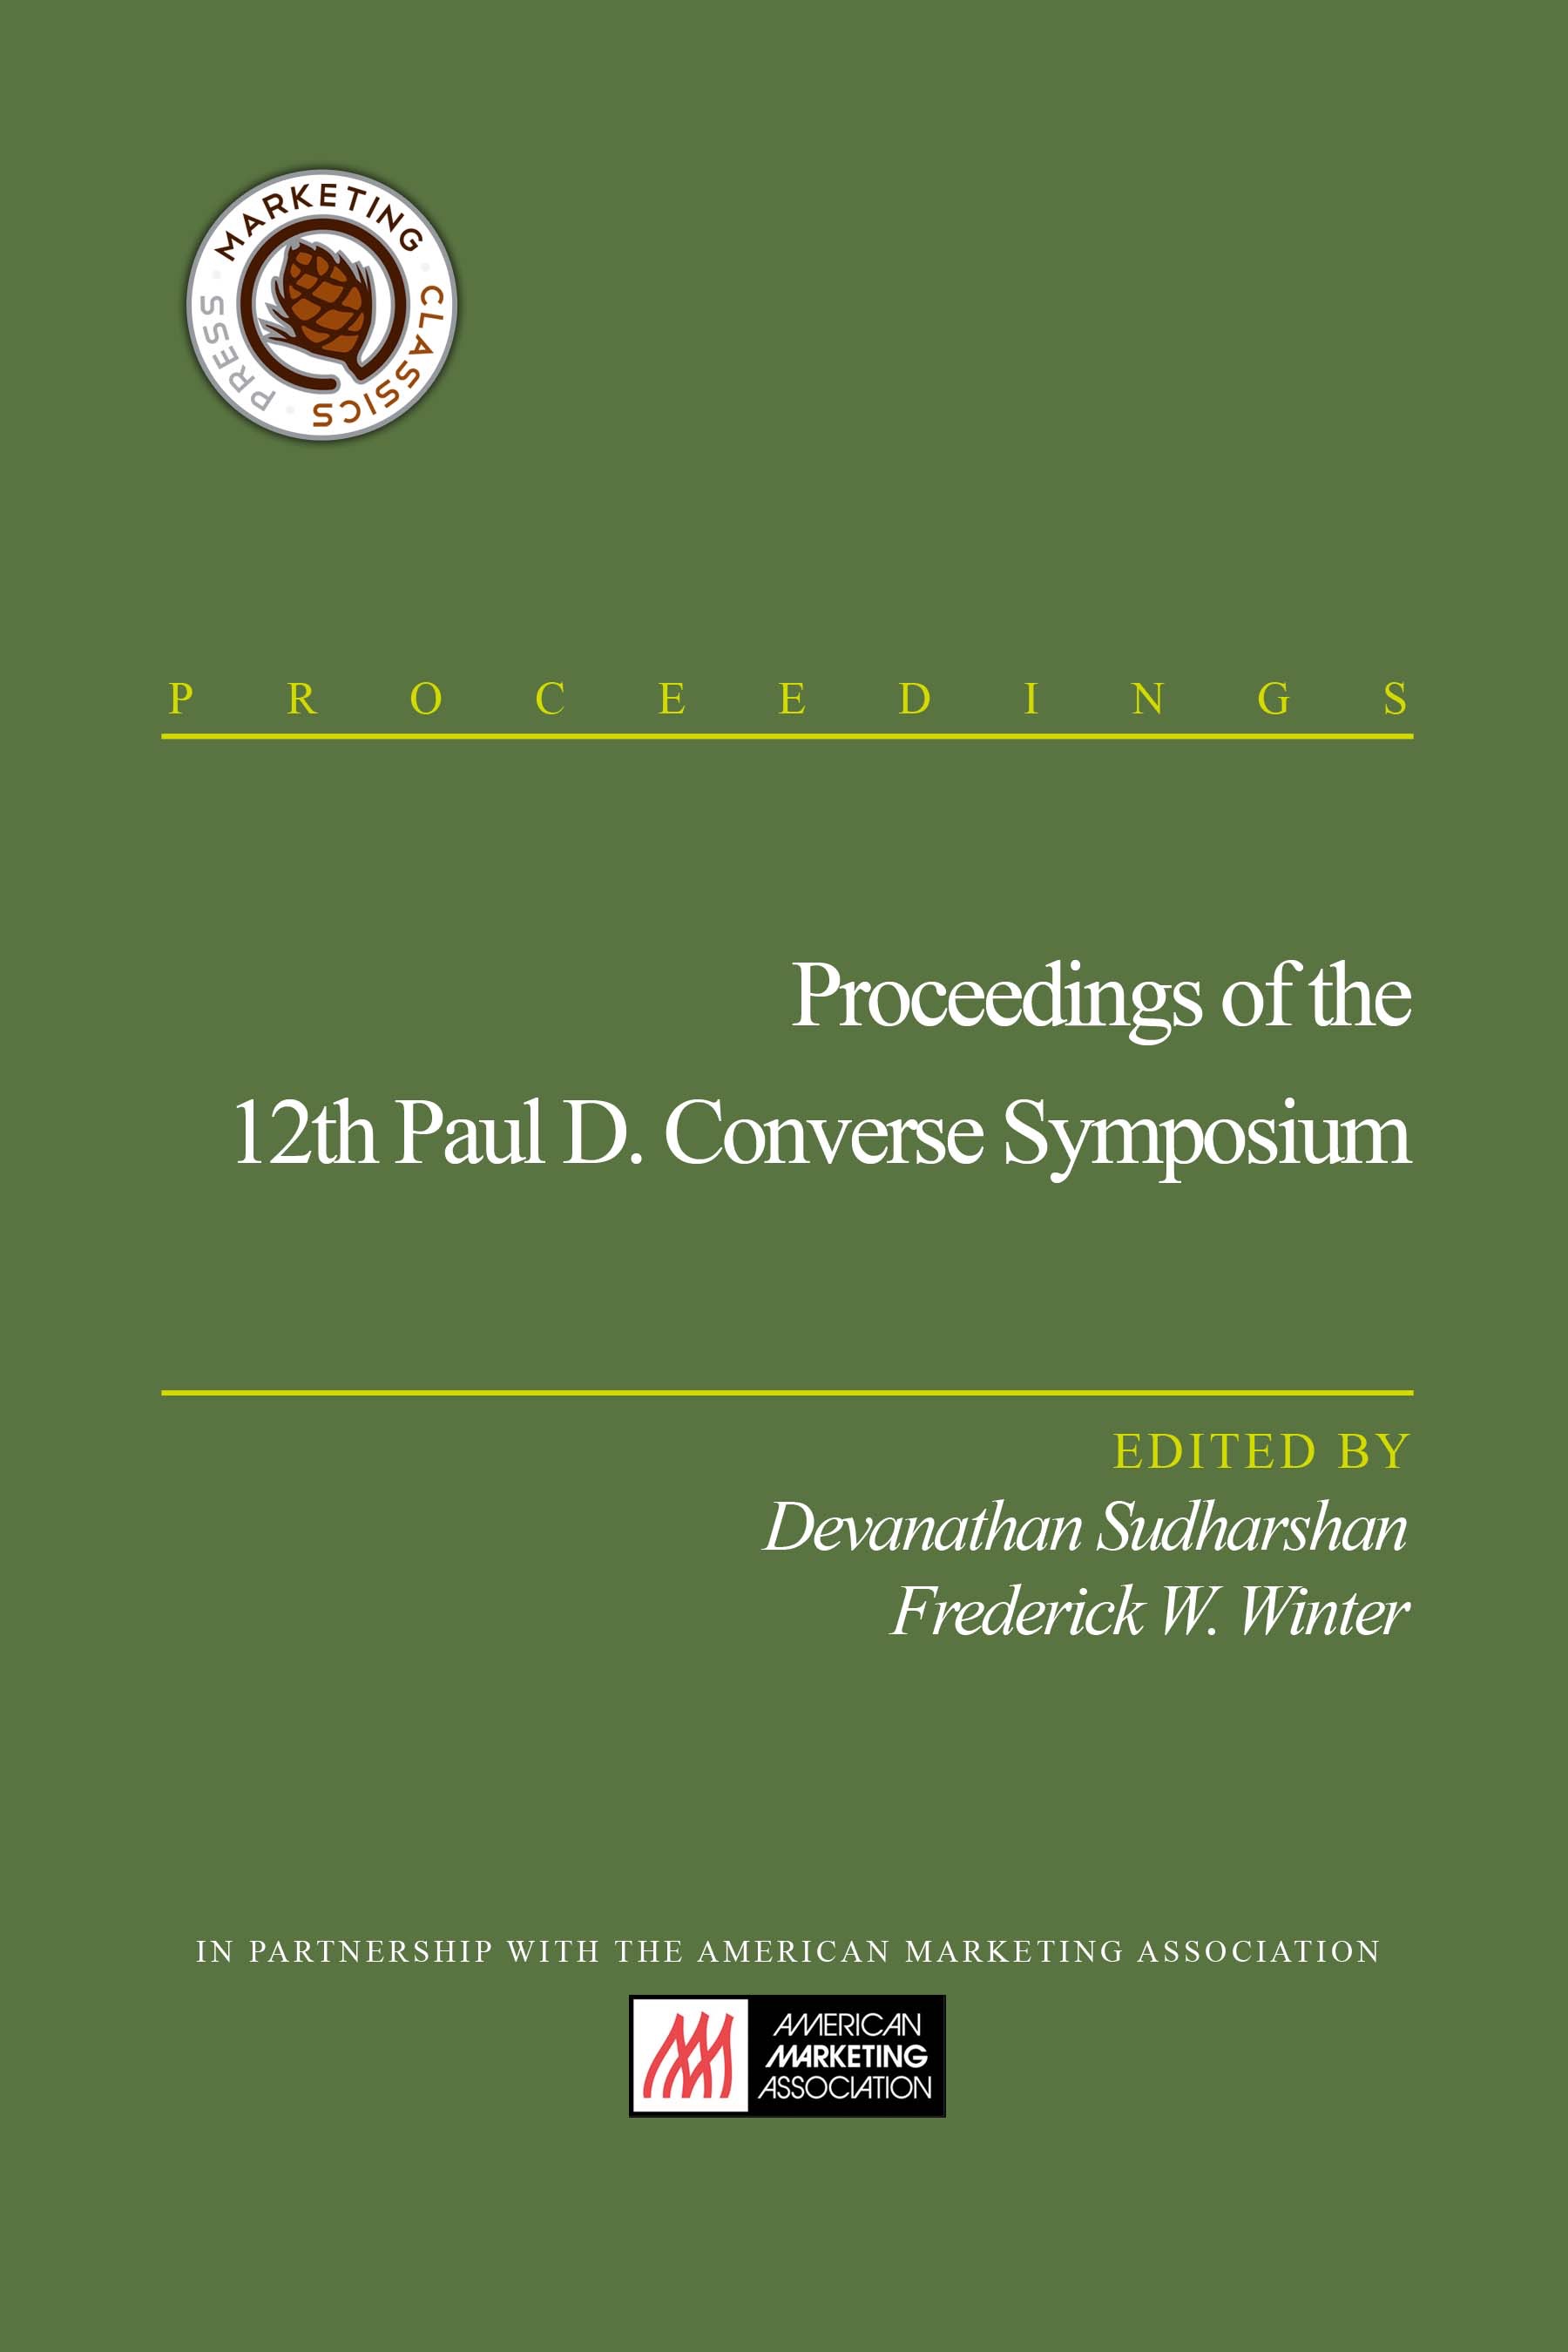 12th Converse Symposium